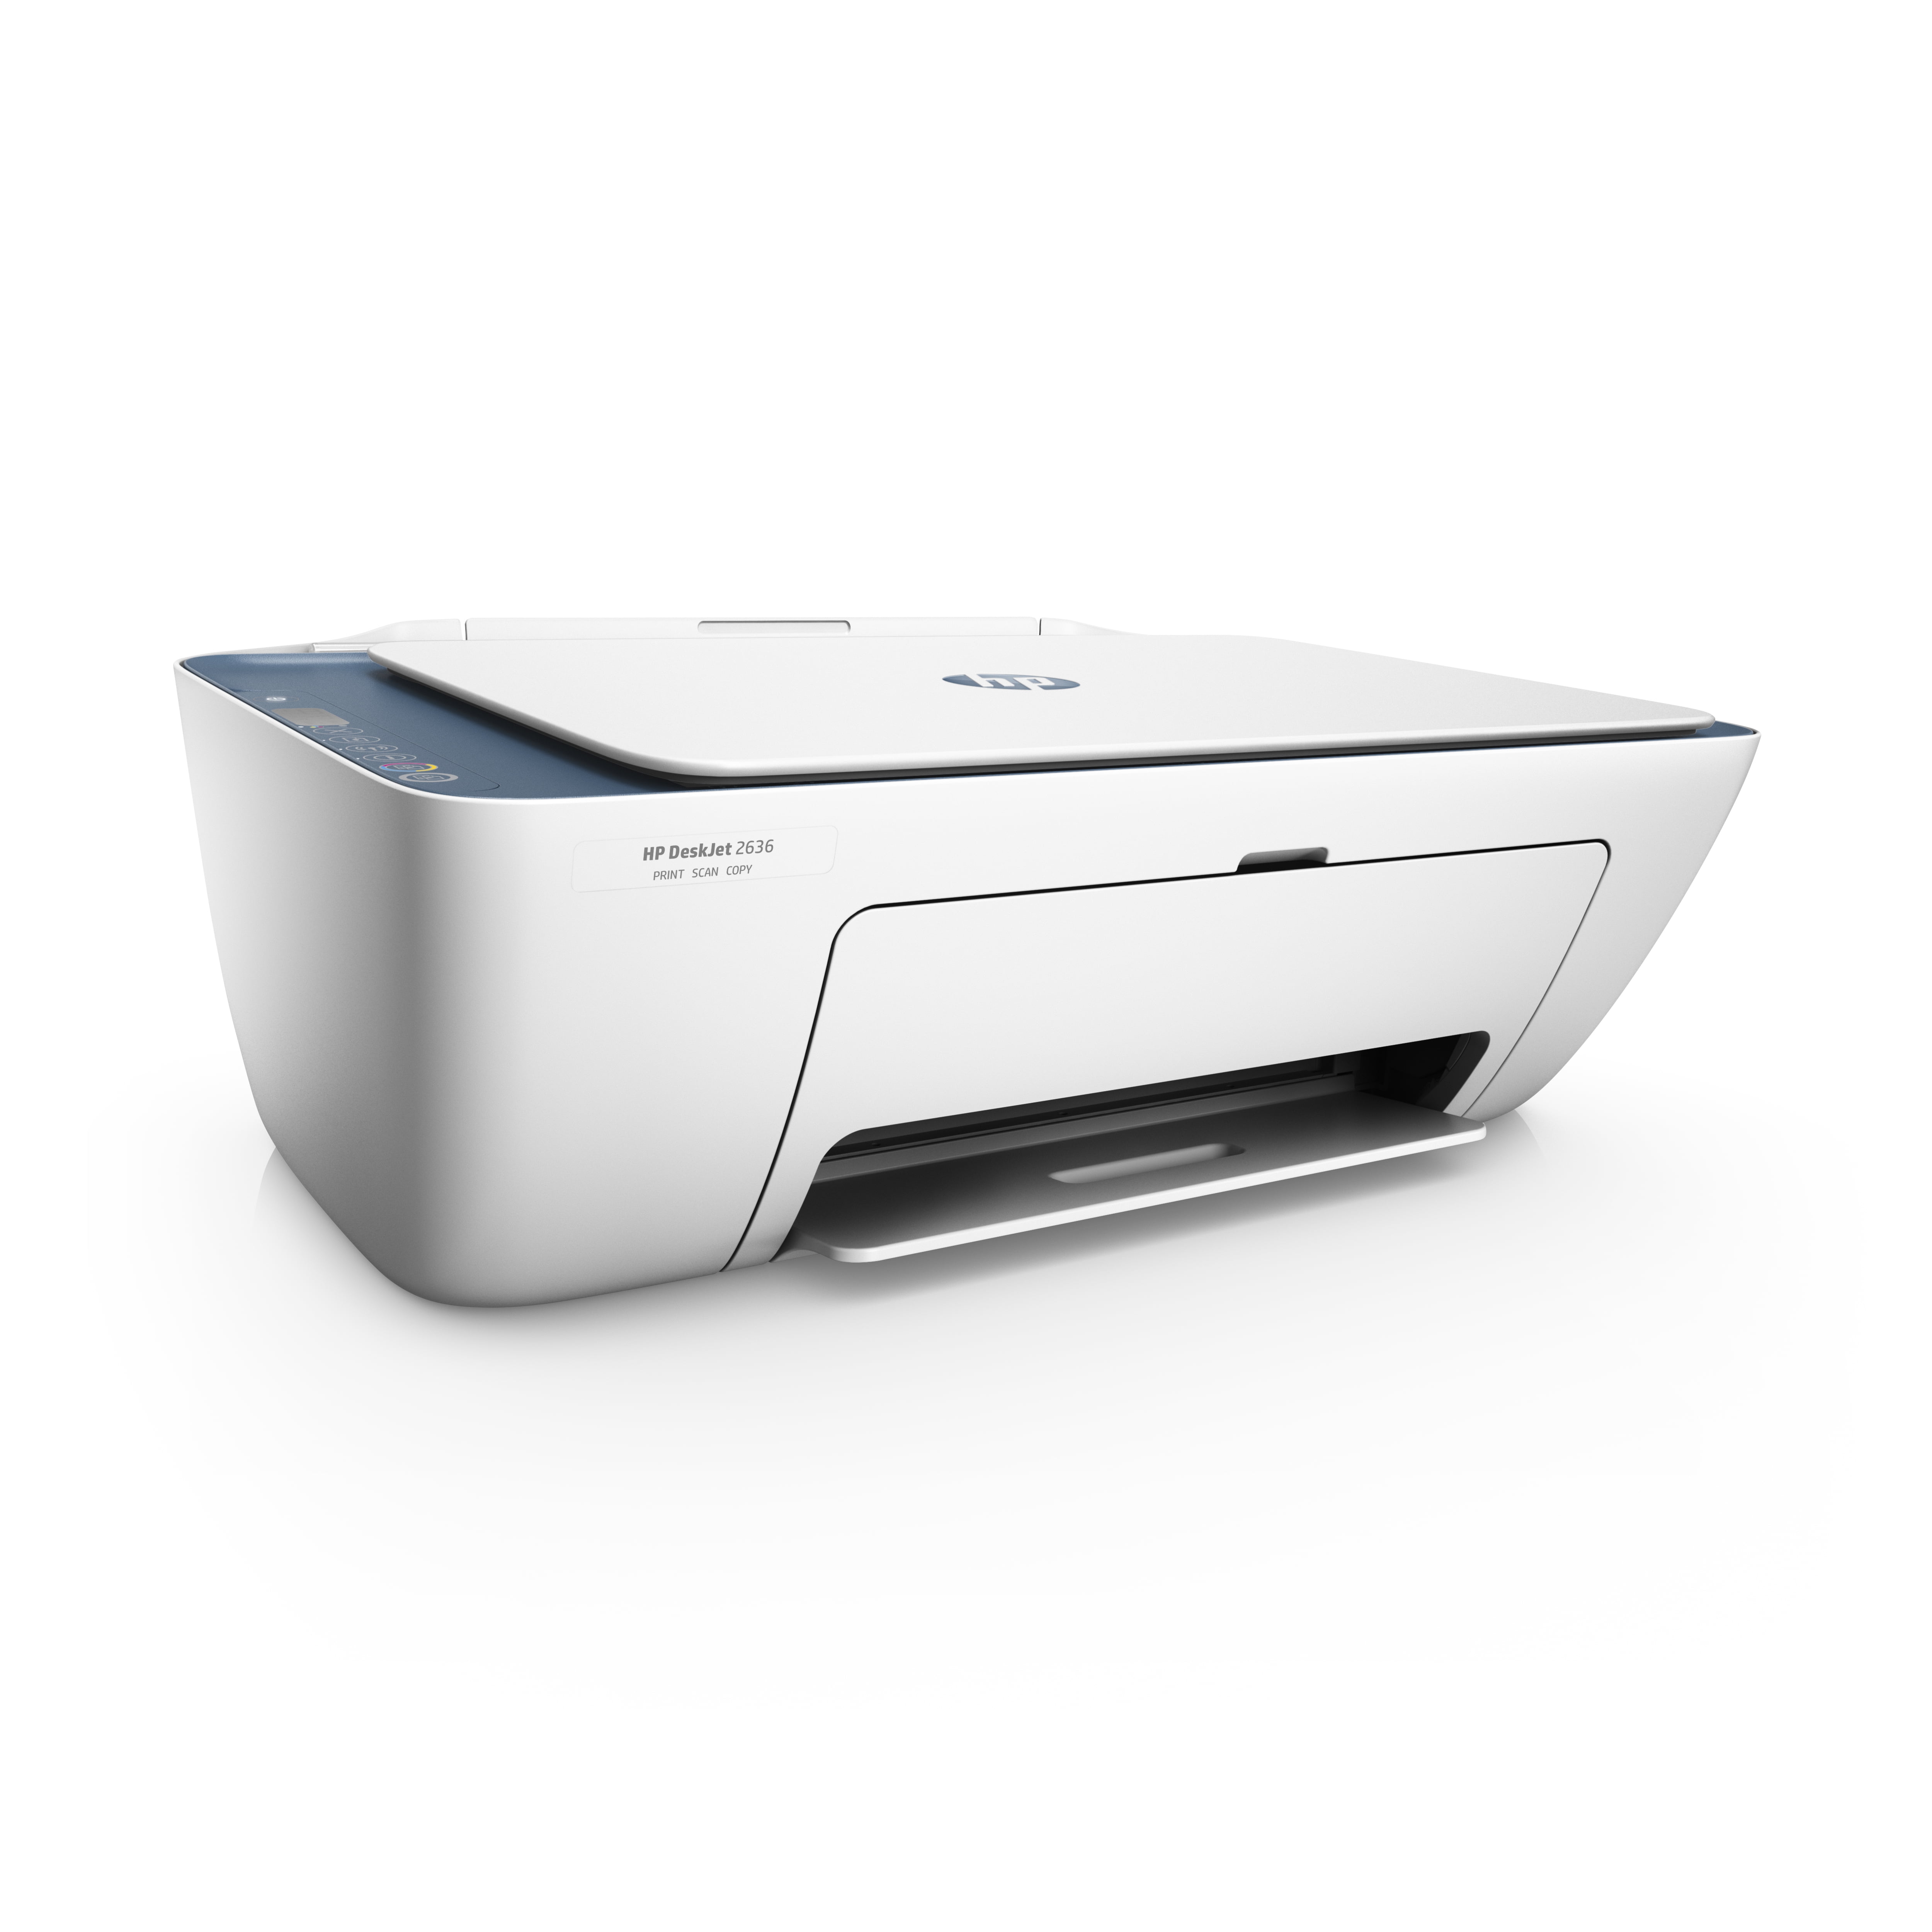 HP 2636 All-in-One Color Inkjet Printer, Blue -